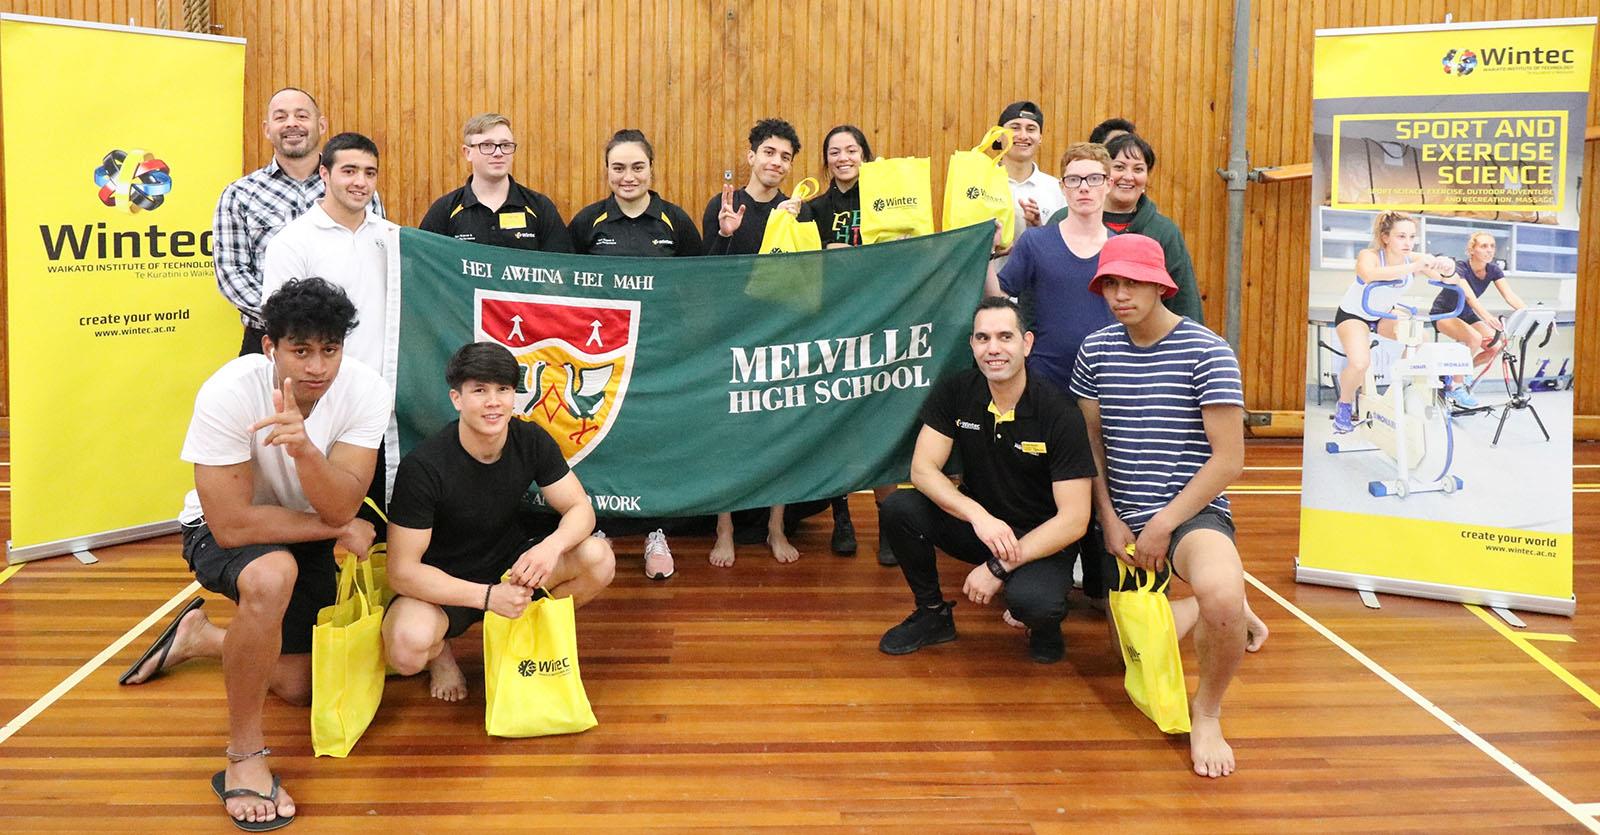 Melville High School Visit - 2nd August 2019